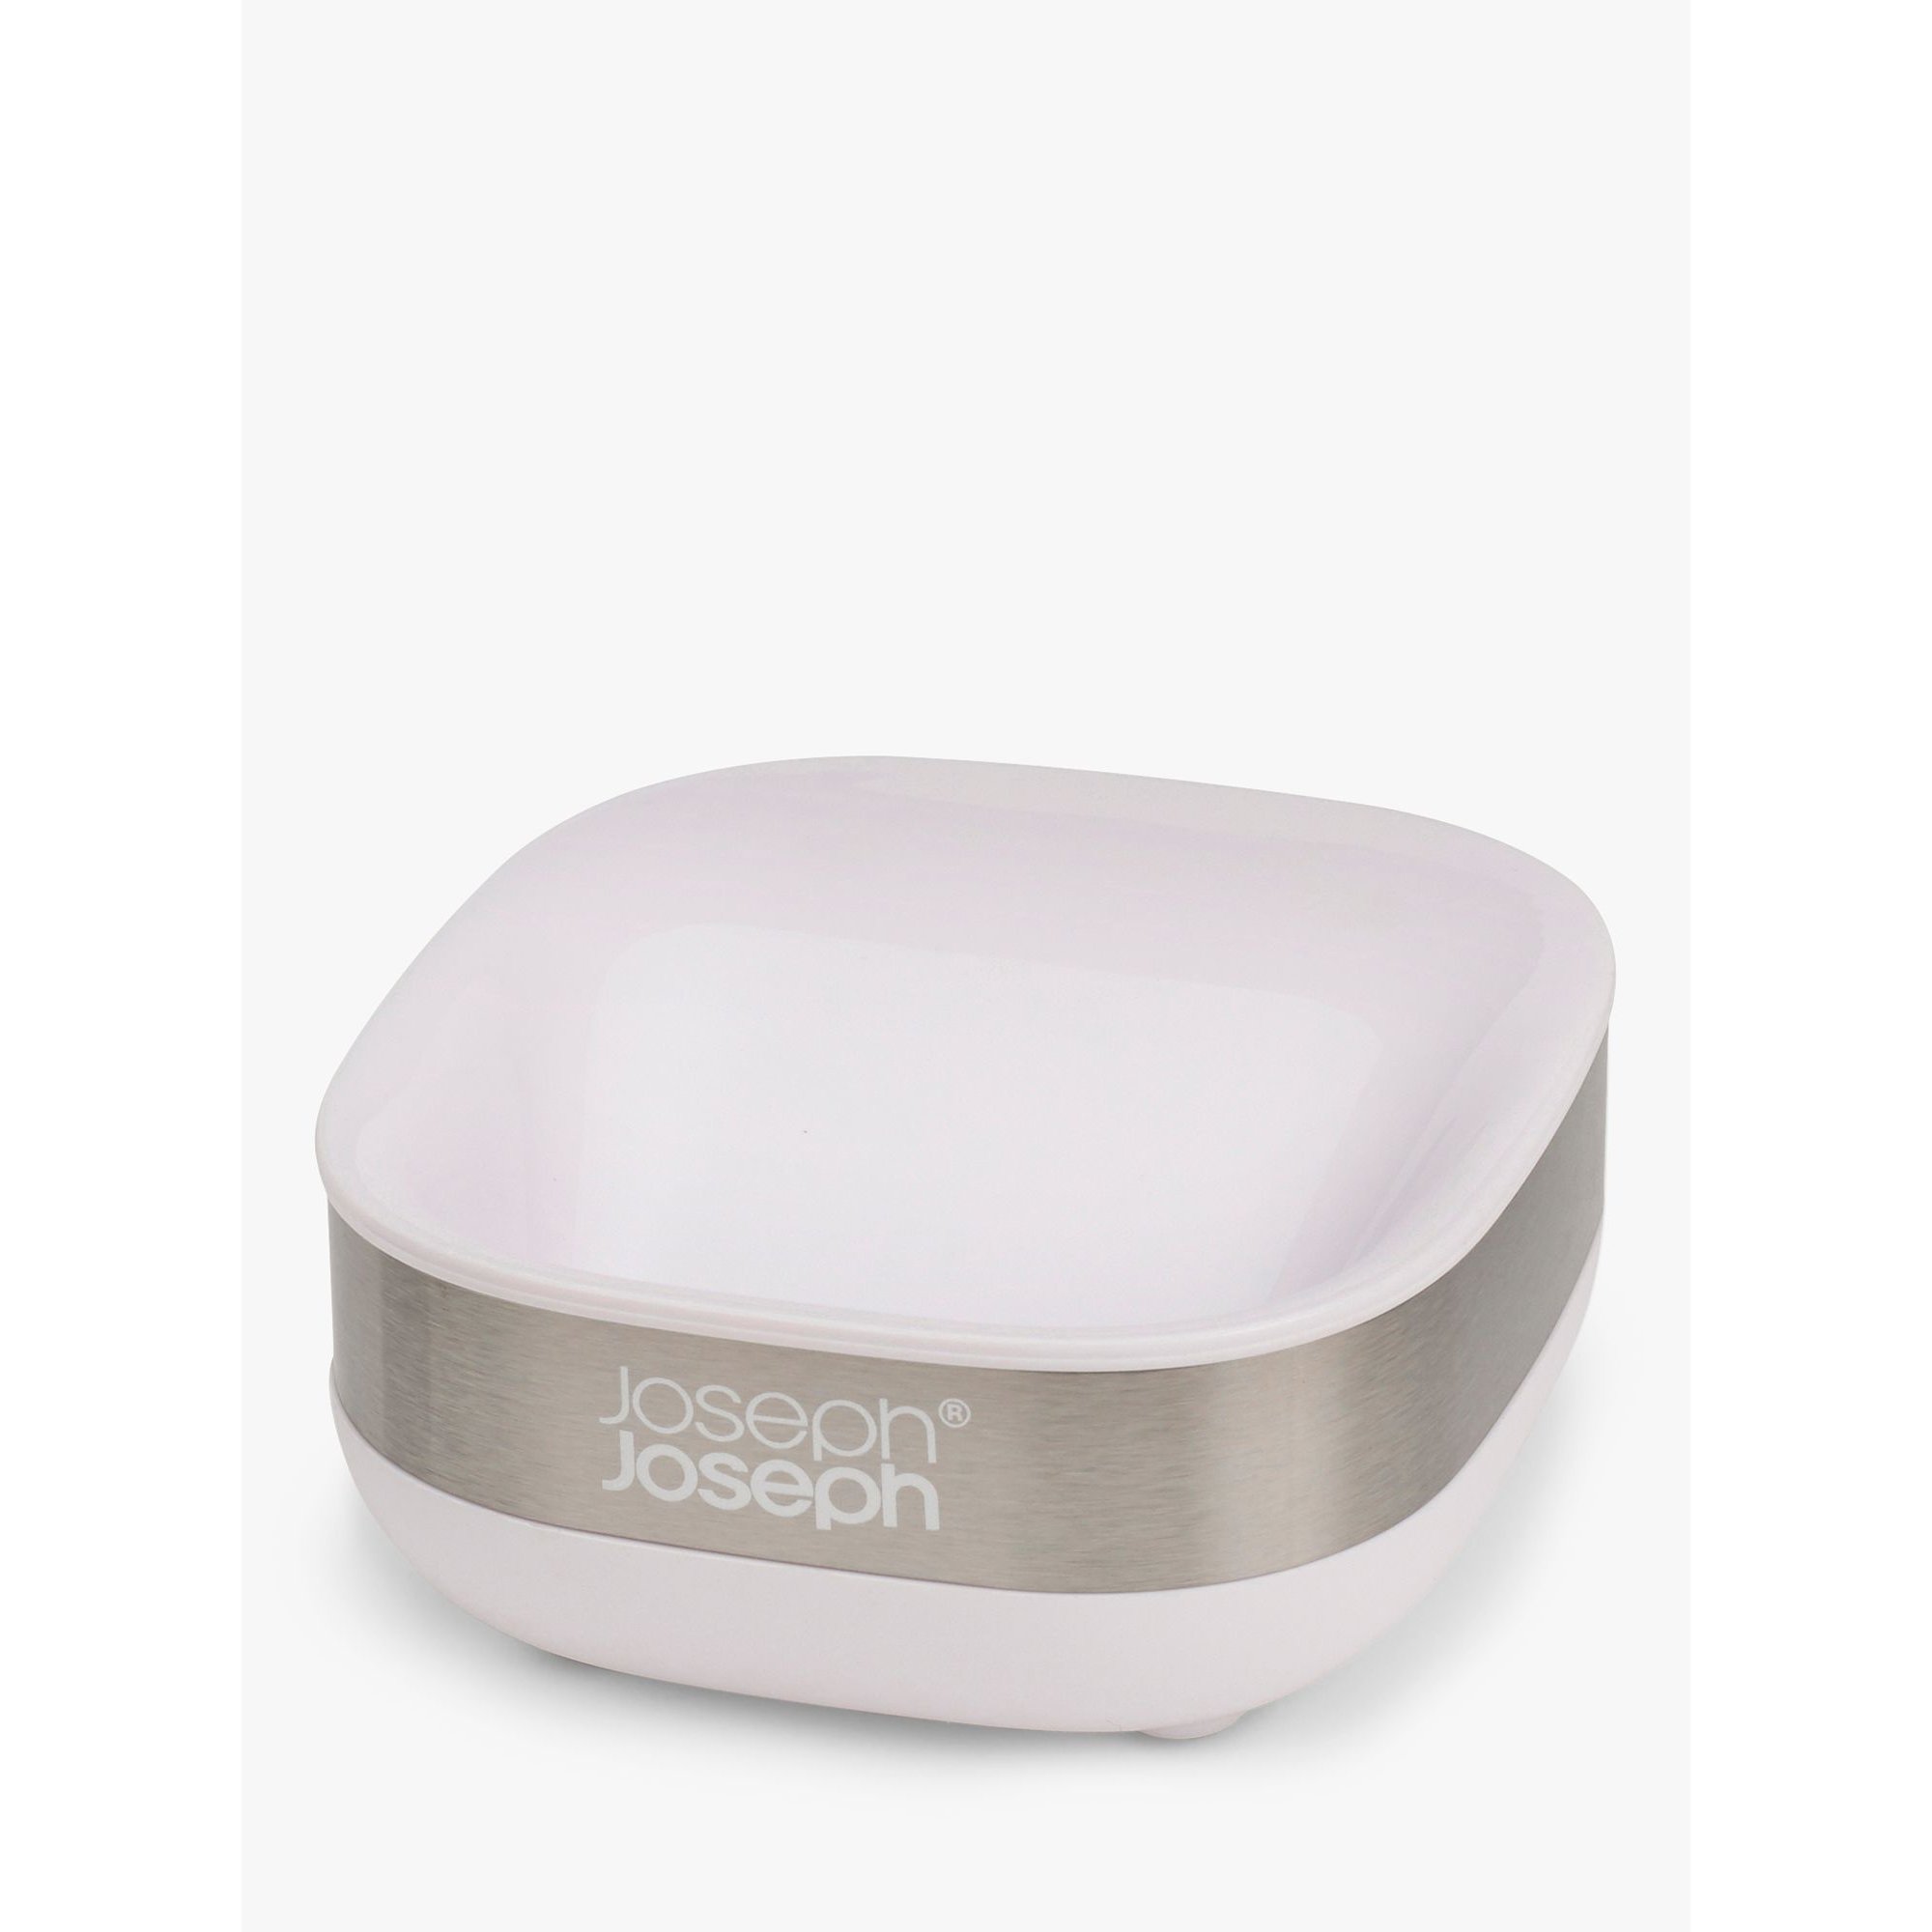 Joseph Joseph Slim™ Compact Soap Dish, Stainless Steel